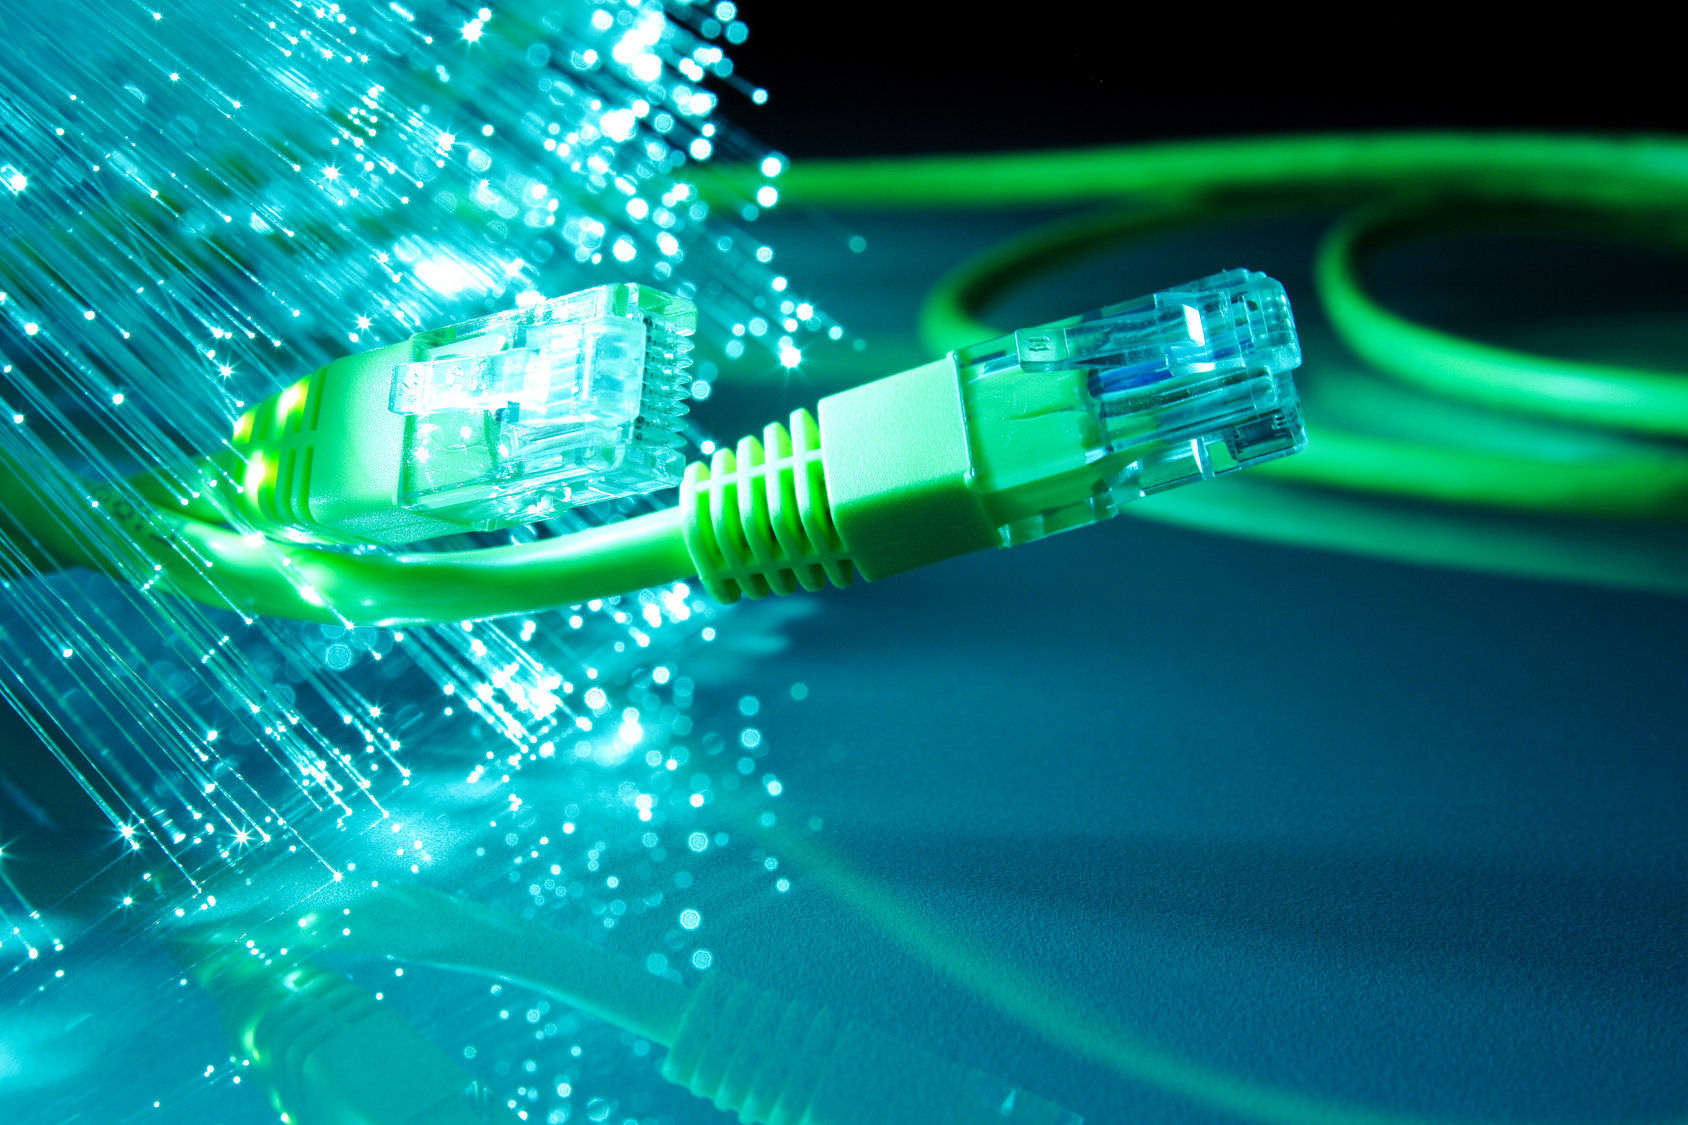 FG plans 40% broadband penetration by 2020